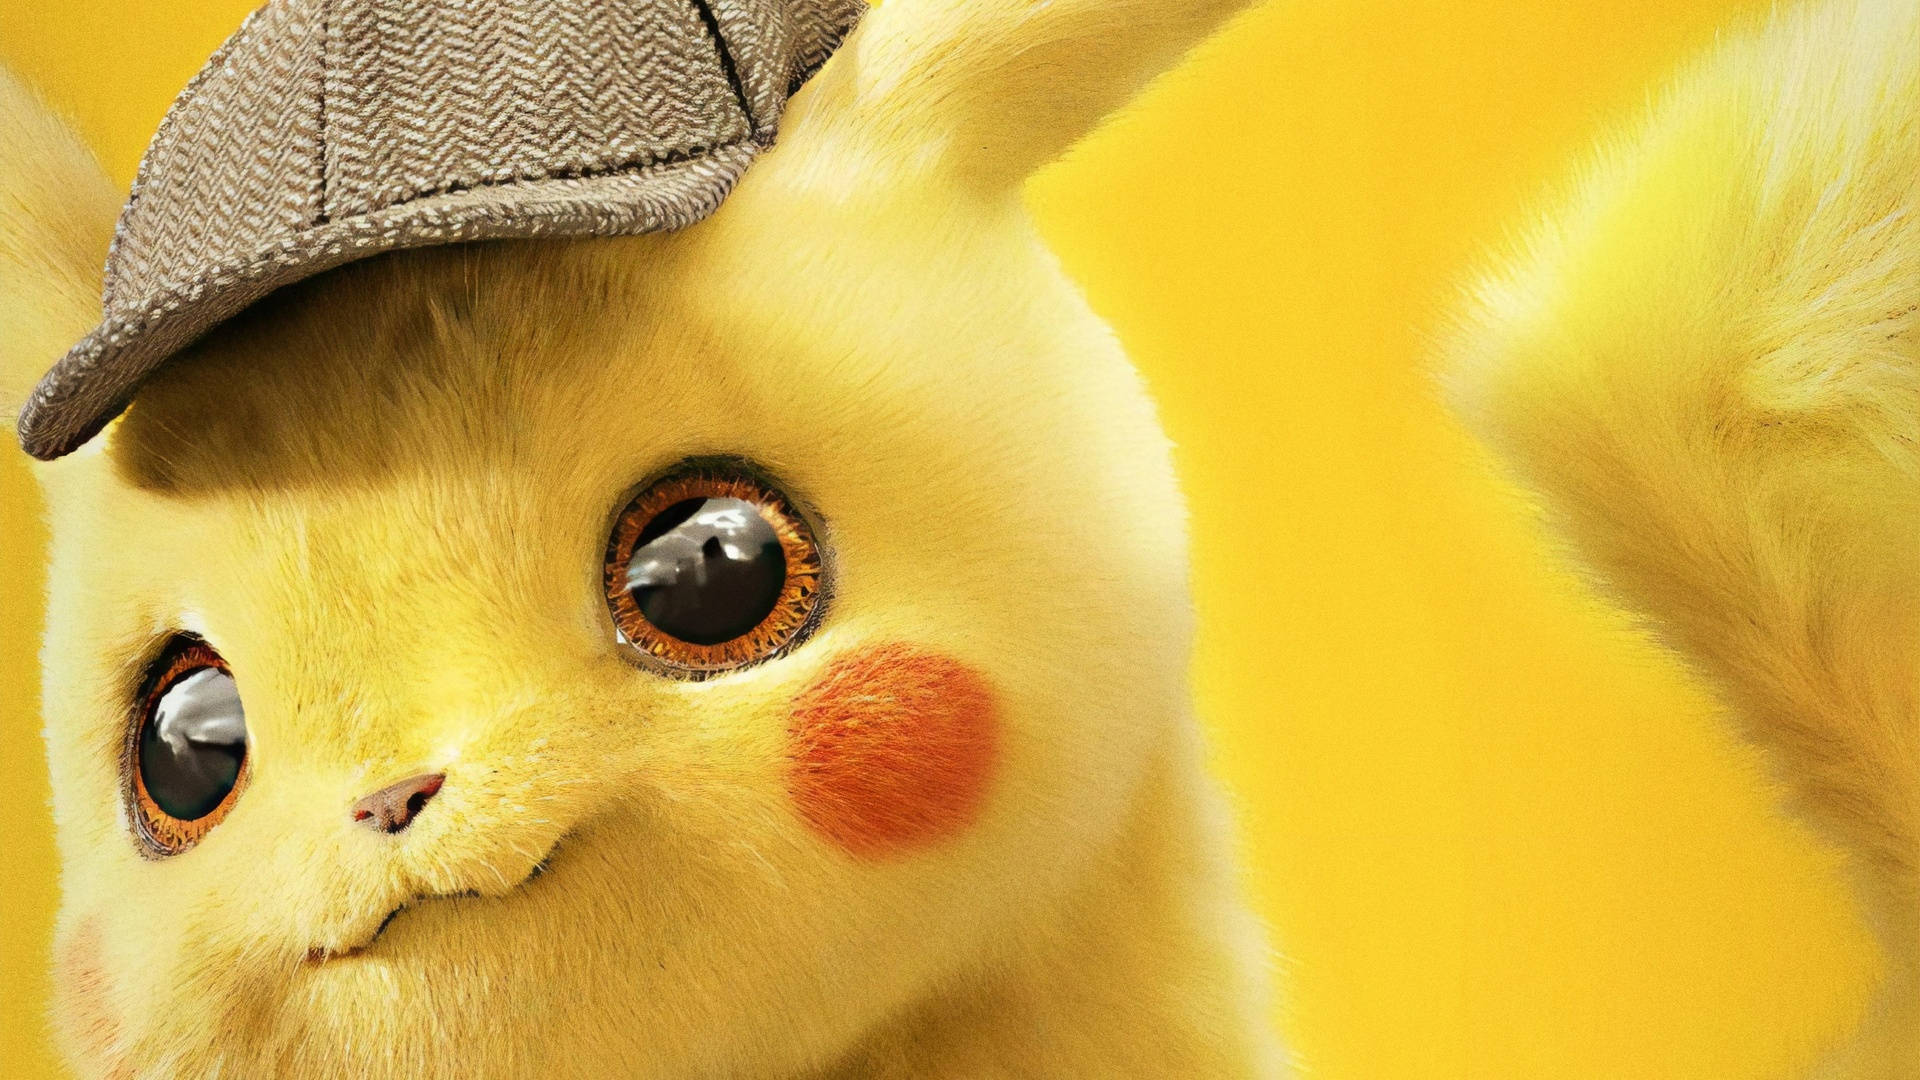 Pikachu Close Up Image Wallpaper